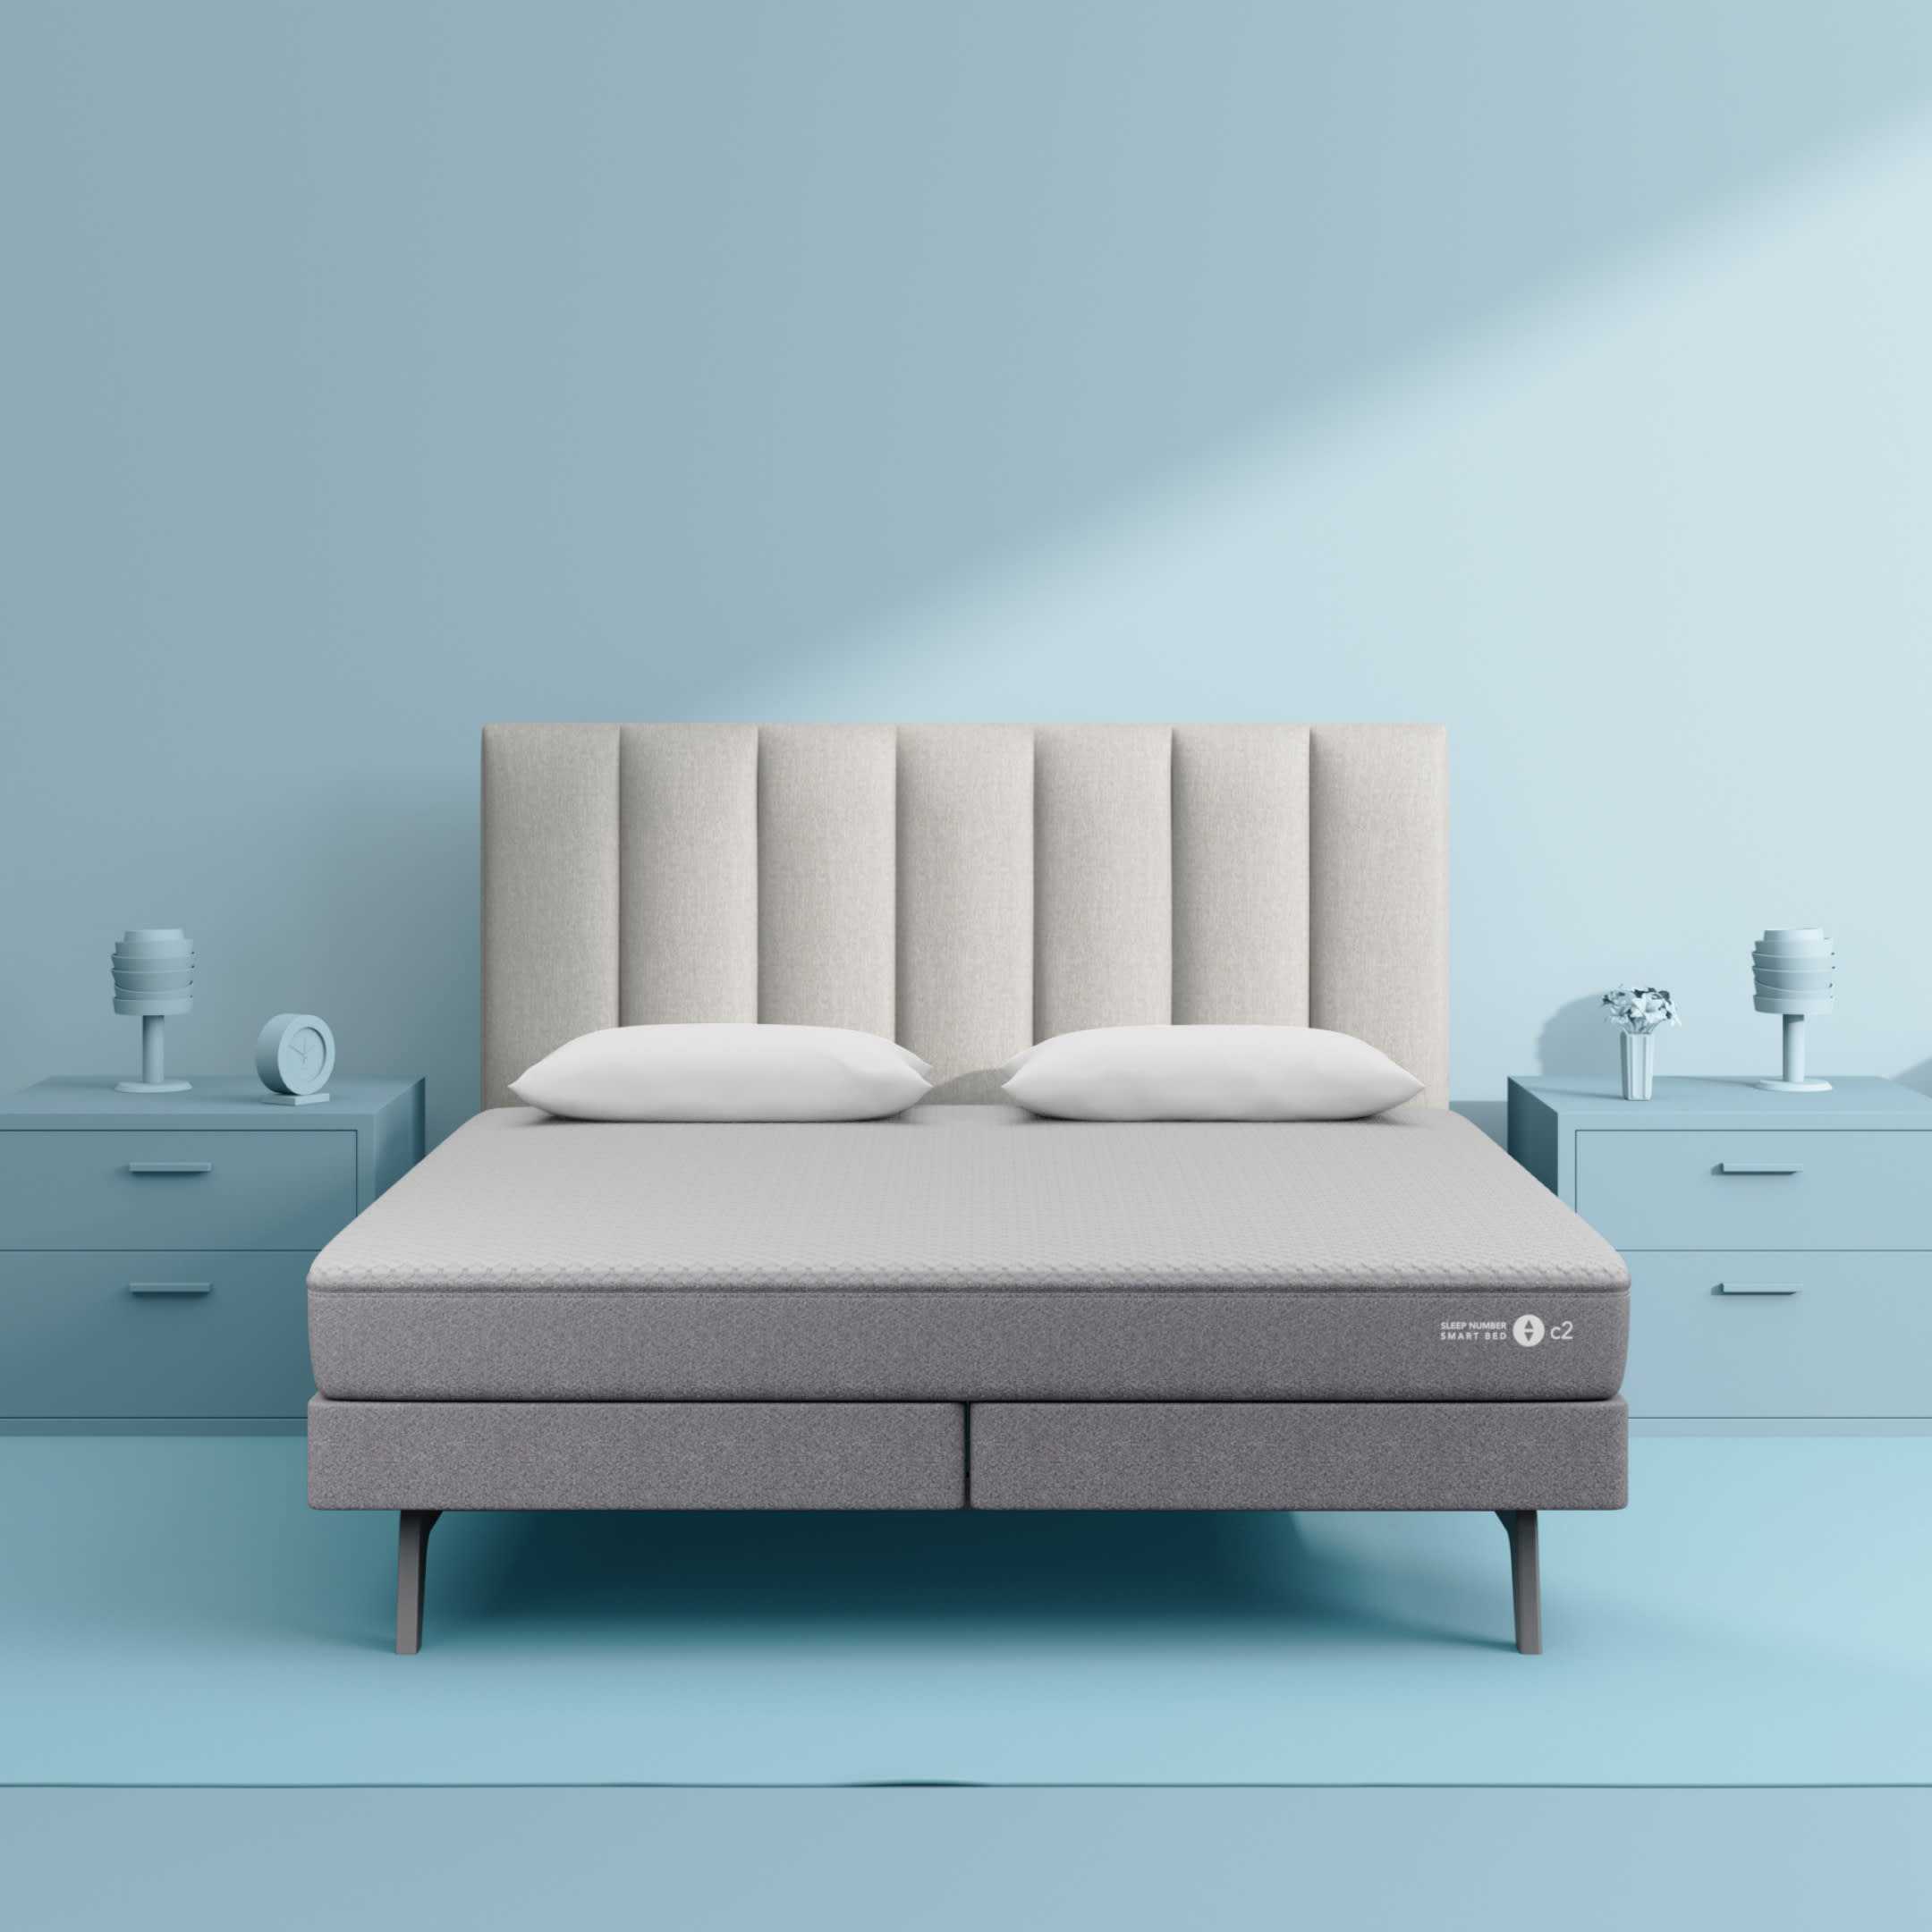 Sleep Number C2 Smart Bed - Full Mattress Adjustable Firmness